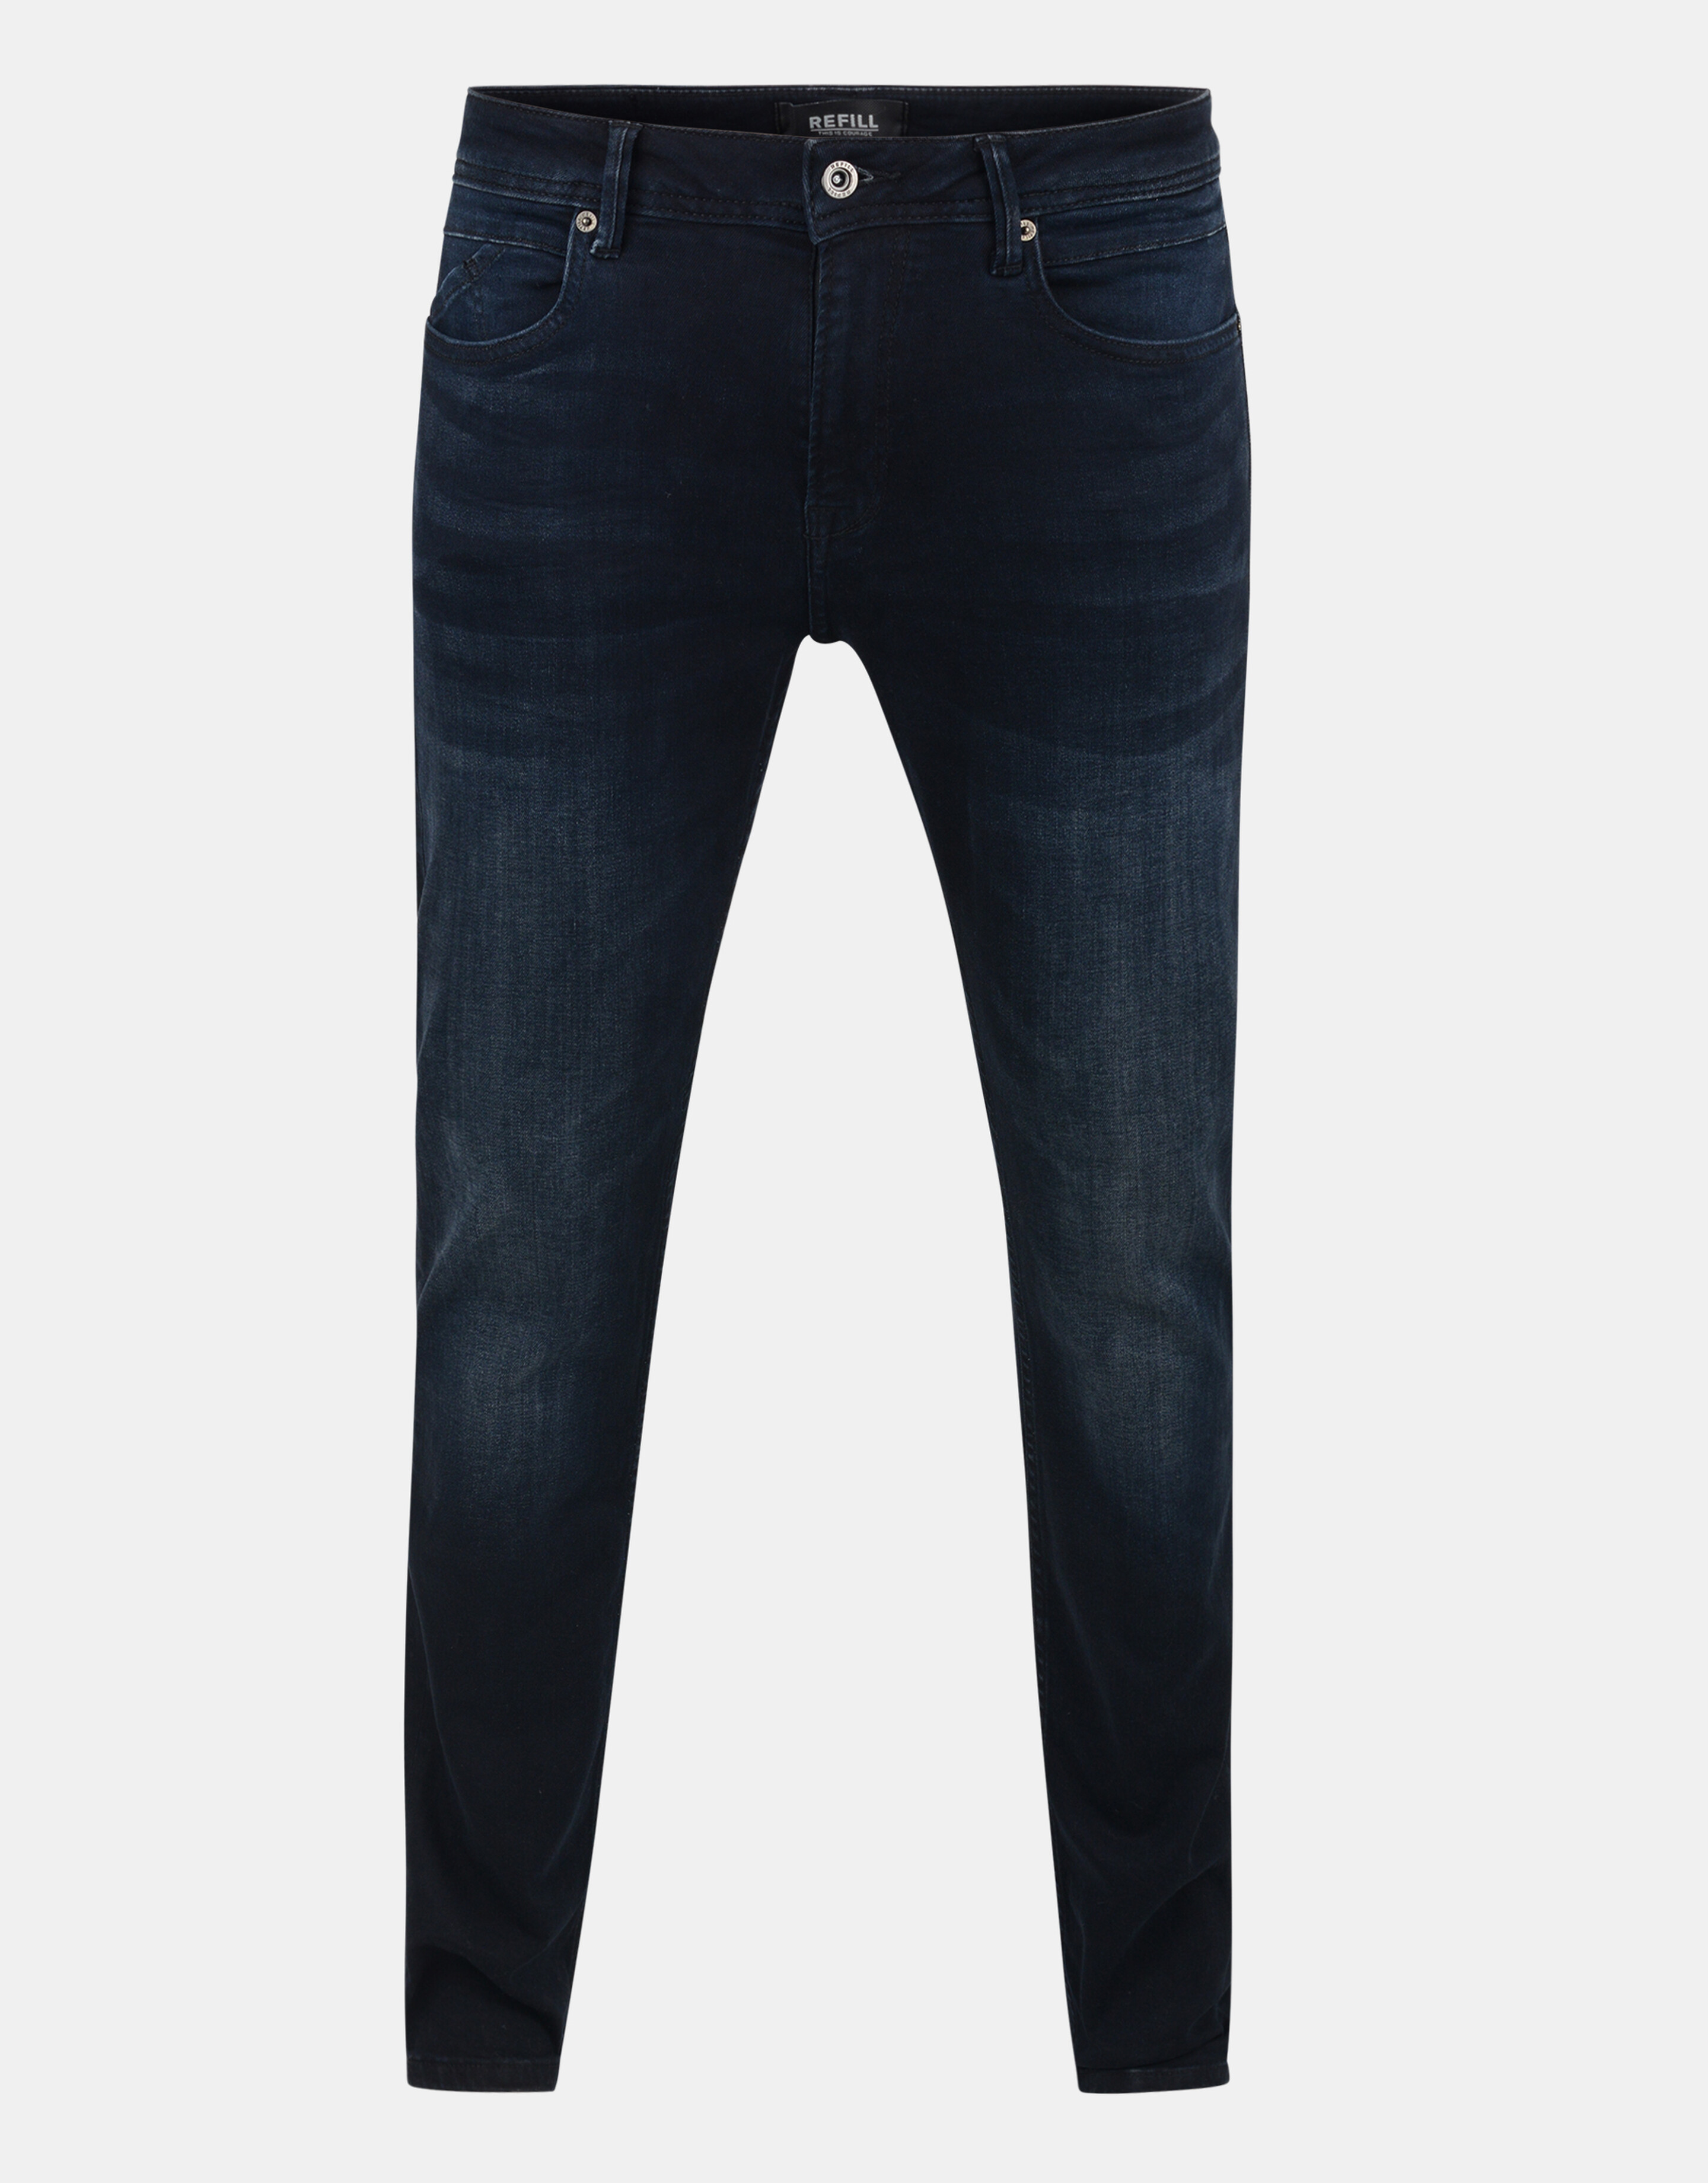 Lewis Straight Blue/Black Jeans L32 Refill